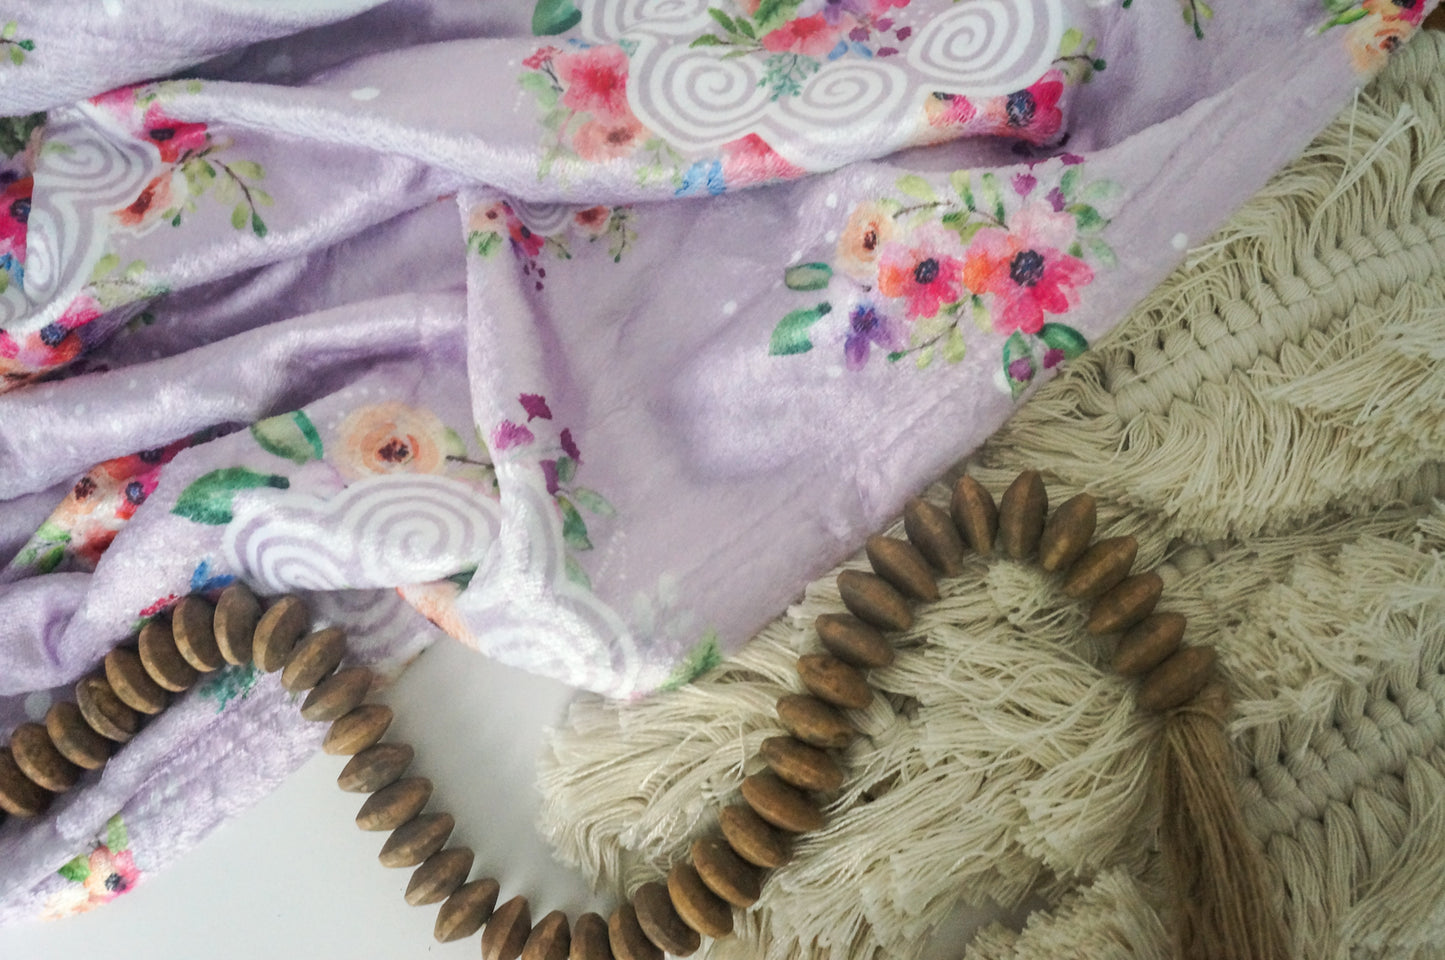 Lixam Minky Floral Blanket - Thistle